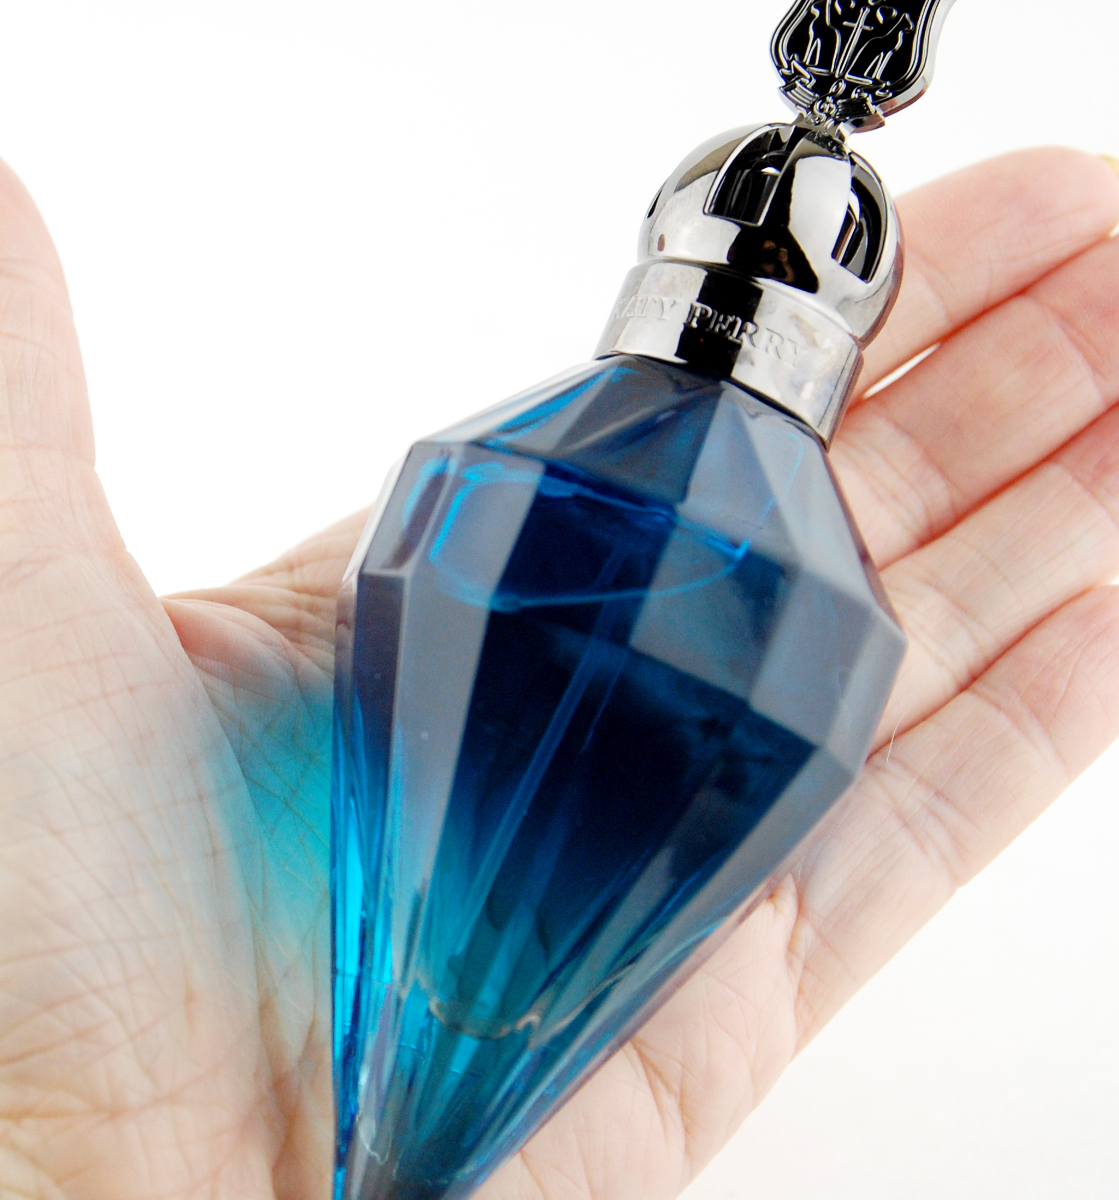 Katy Perry Killer Queen Royal Revolution Eau De Parfum 100 ml น้ำหอมเพชร Katy Perry เพชรสีน้ำเงิน ดั่งเจ้าหญิงผู้มีเสน่ห์ หาญกาญ หอมสดชื่นดึงดูดใจ